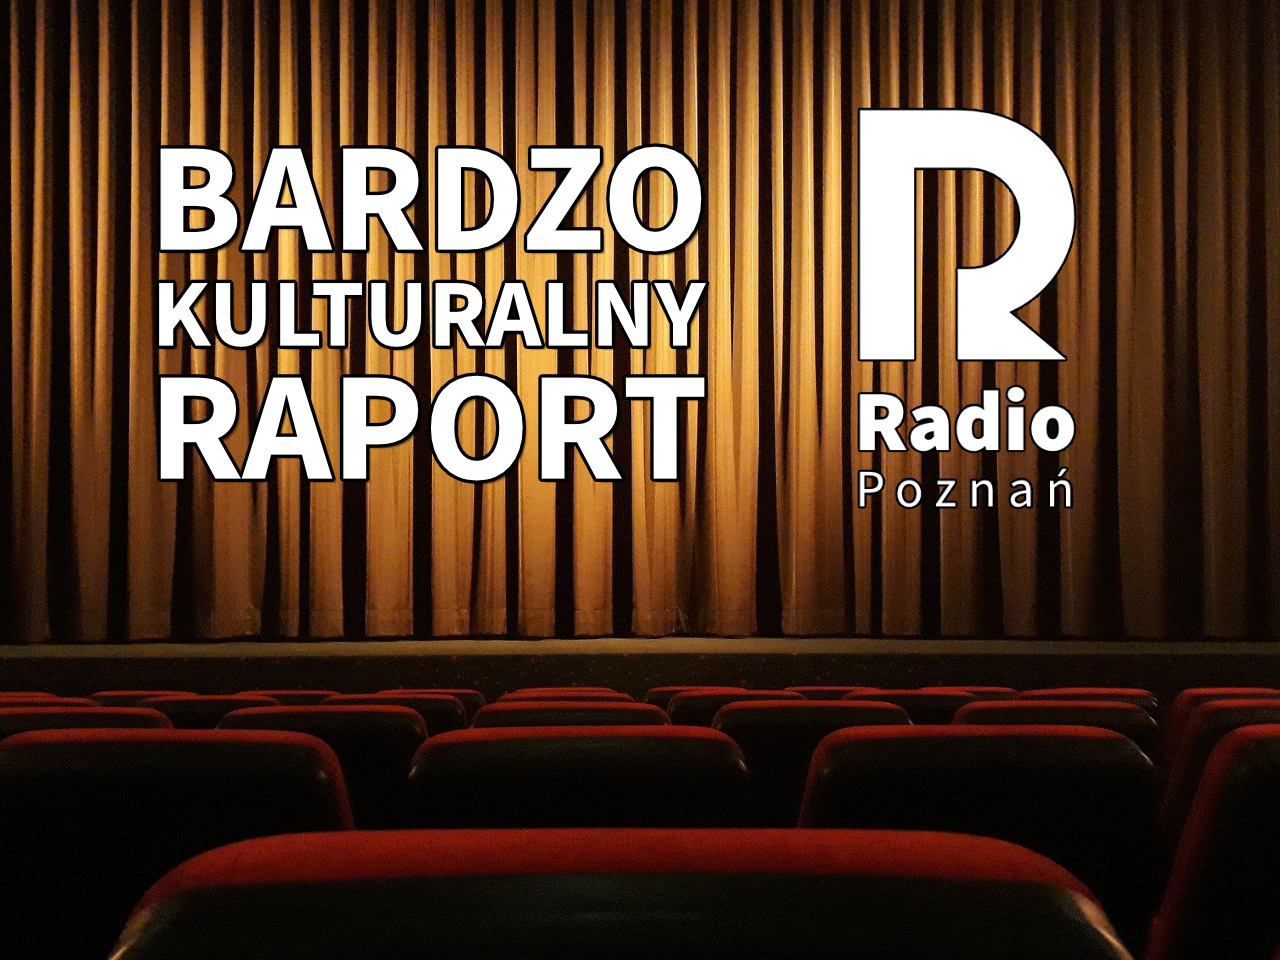 kultura serwis cibor bardzo kulturalny raport - Radio Poznań